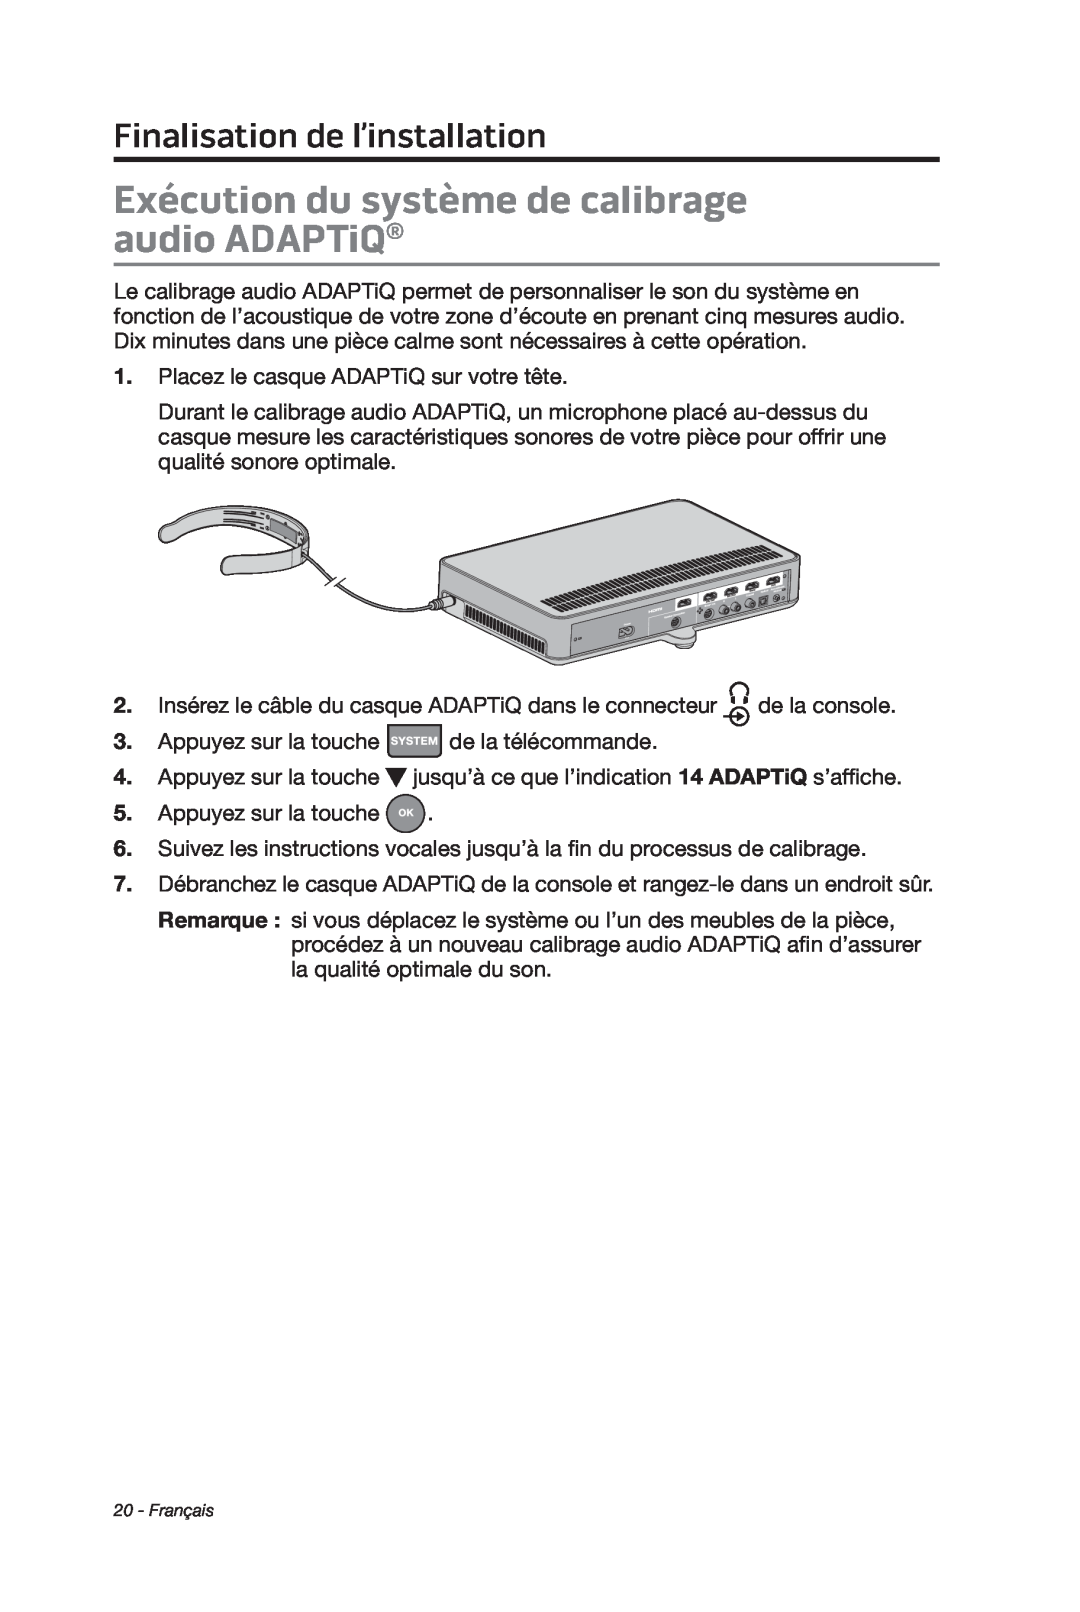 Bose cinemate manual Exécution du système de calibrage audio ADAPTiQ, Finalisation de l’installation 